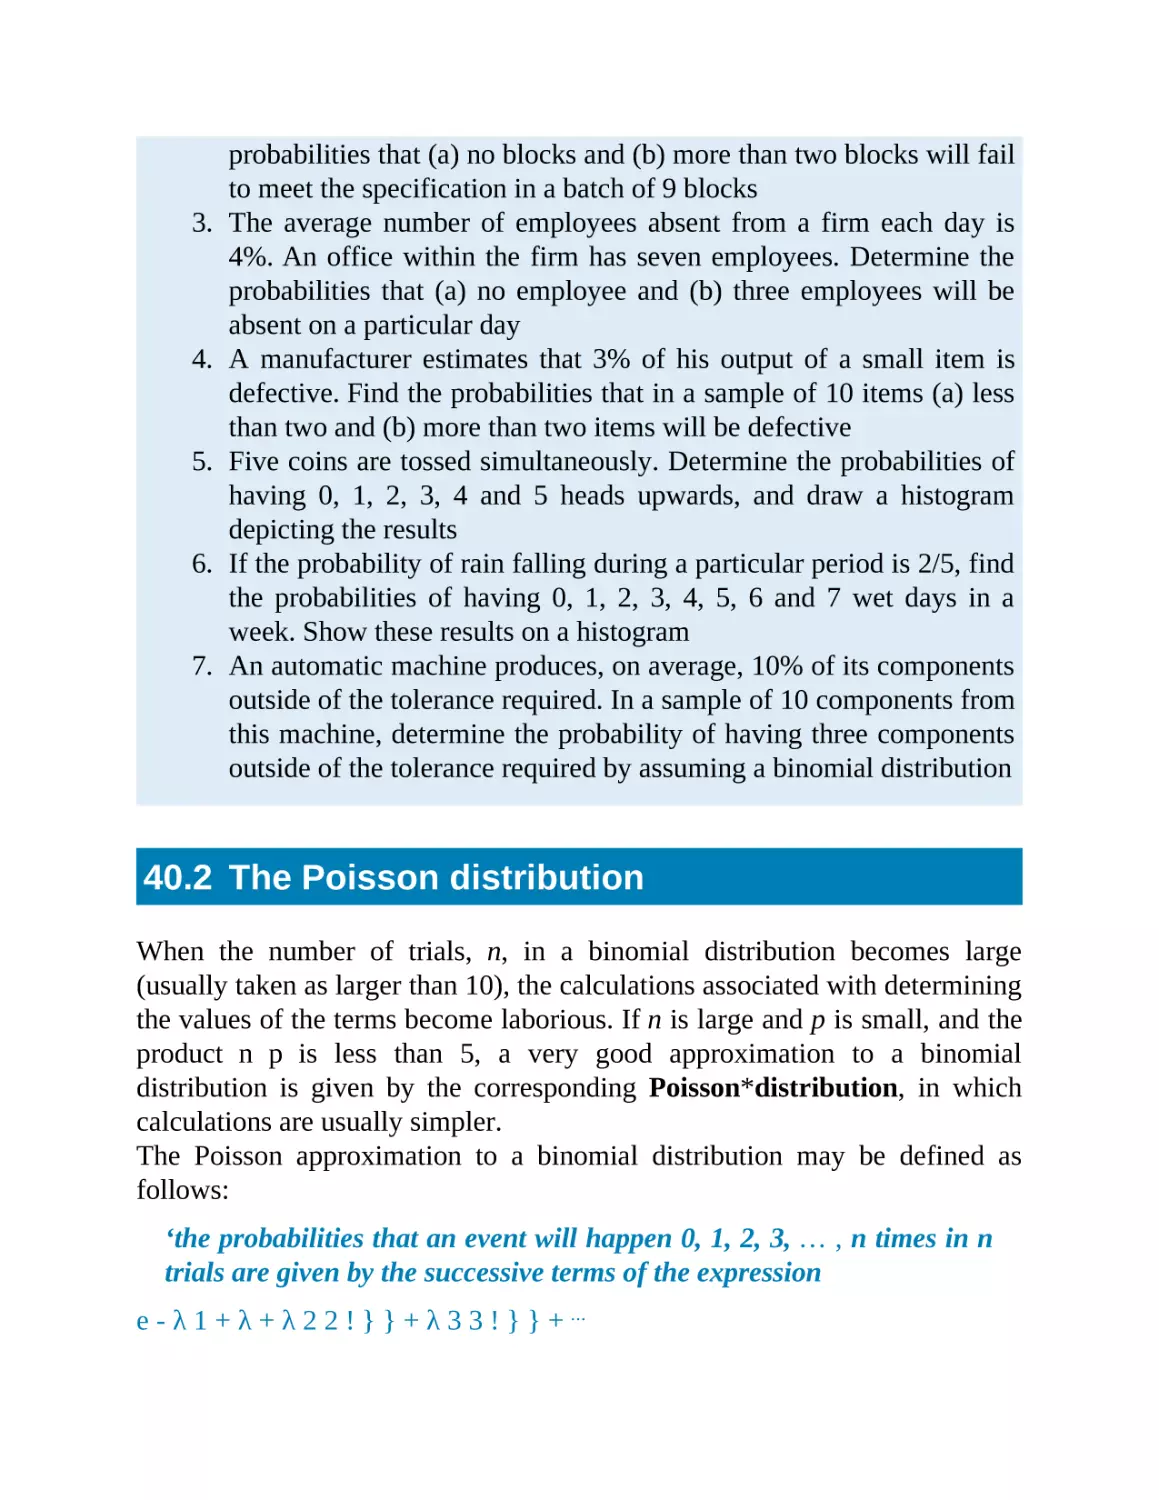 40.2 The Poisson distribution